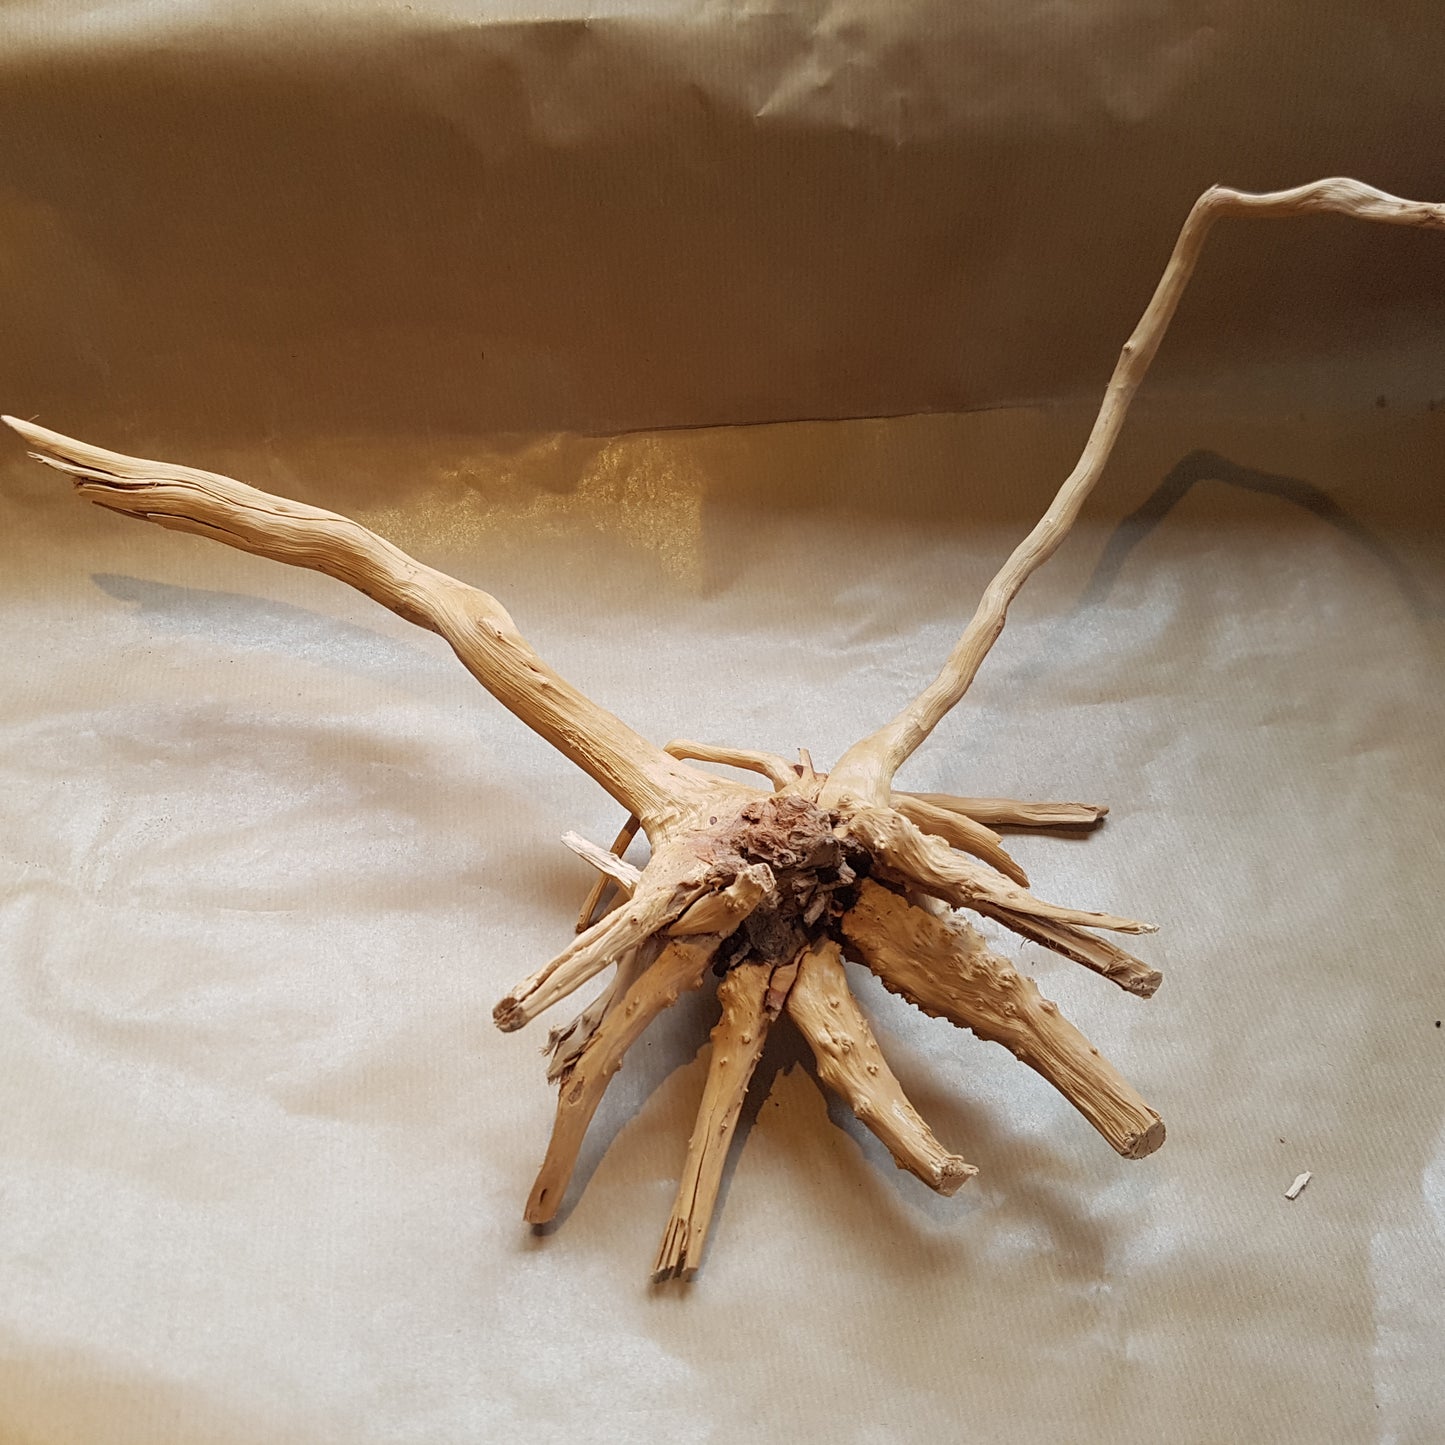 Aquarium Wood Root - Small piece